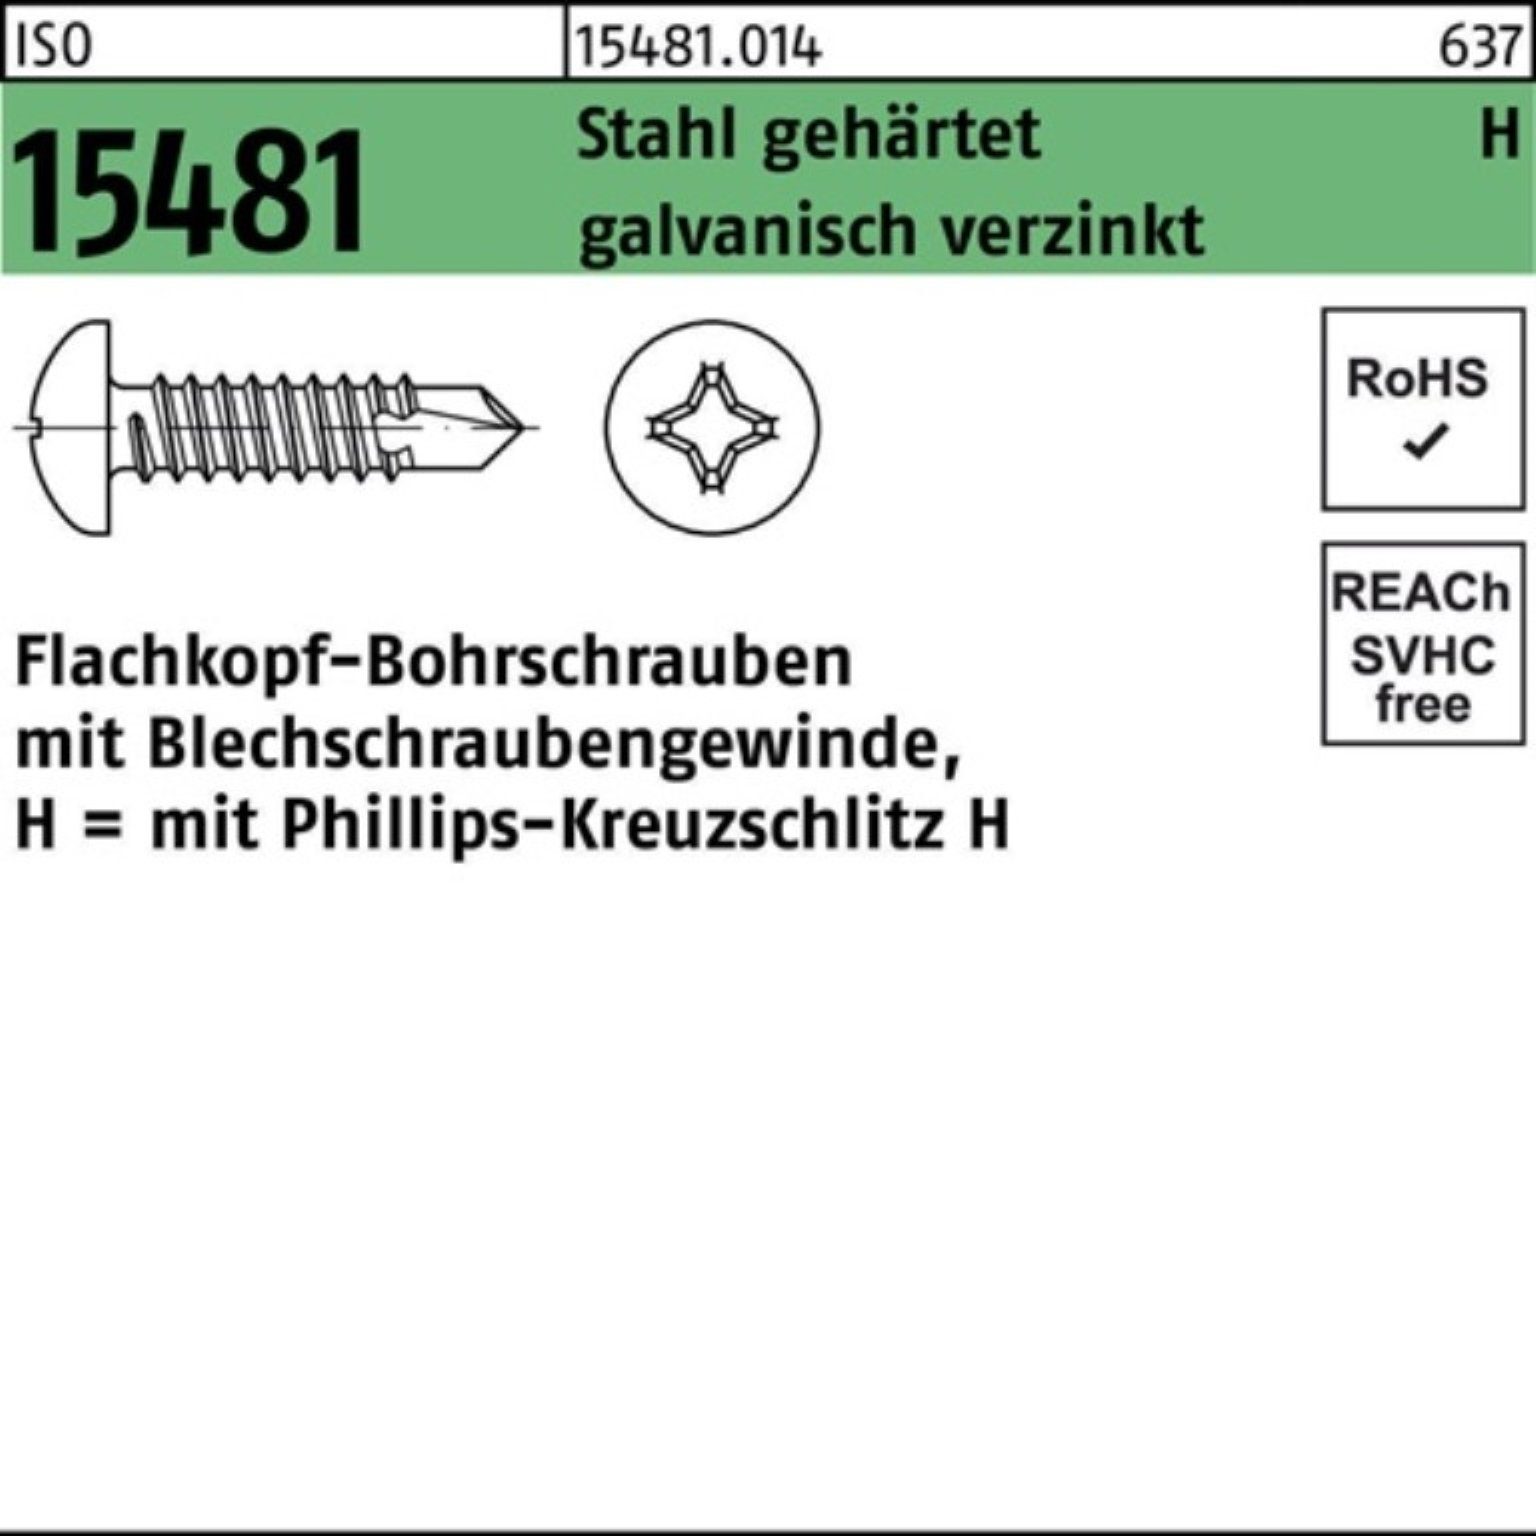 PH 1000er Reyher Pack gehärtet Bohrschraube FLAKObohrschraube 2,9x13-H ISO Stahl ST 15481